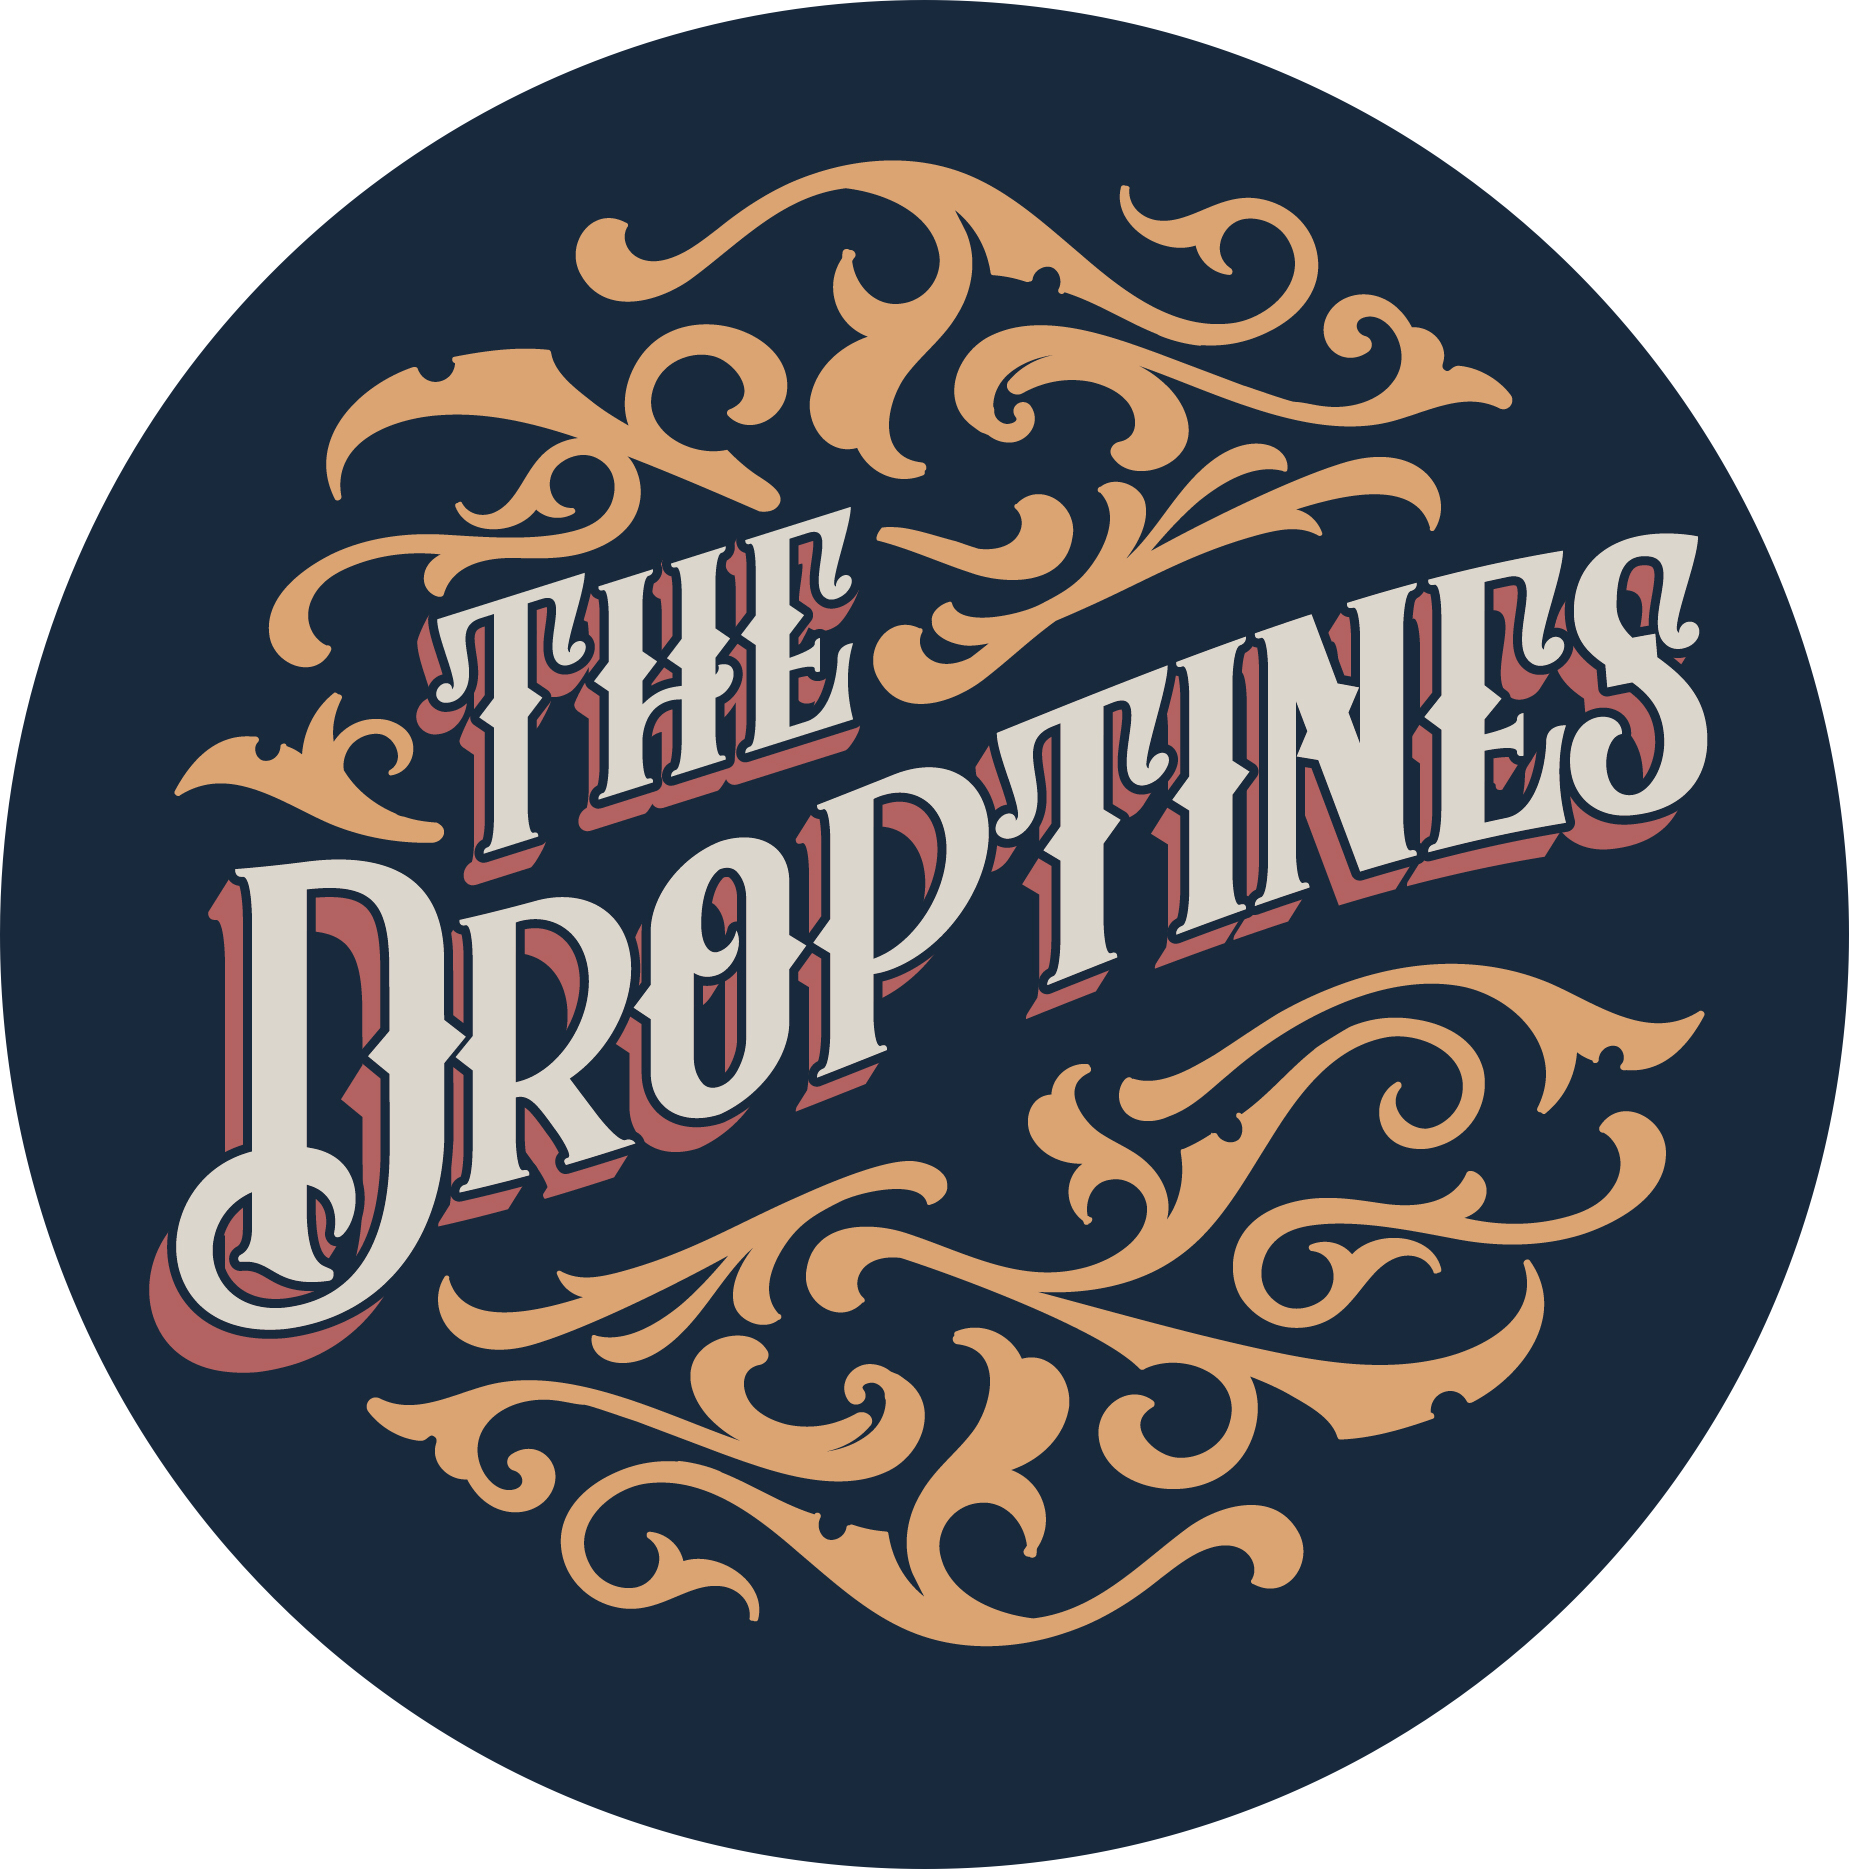 The Droptines